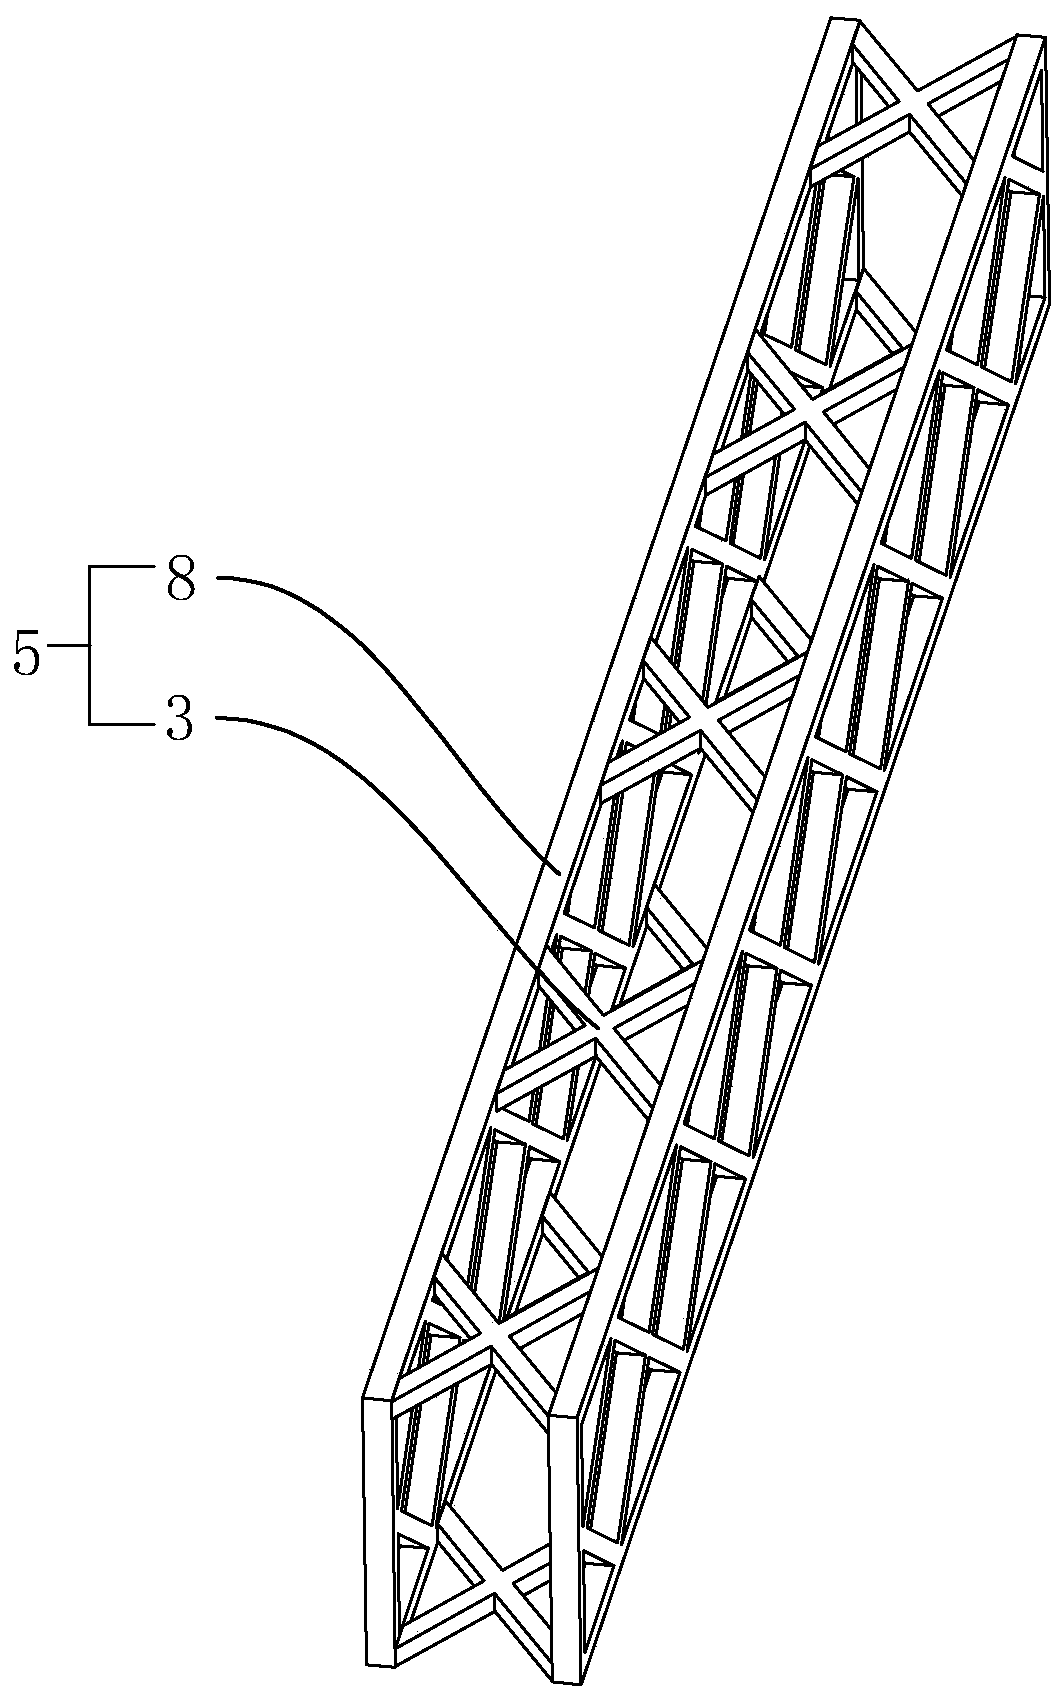 Construction method of steel trestle